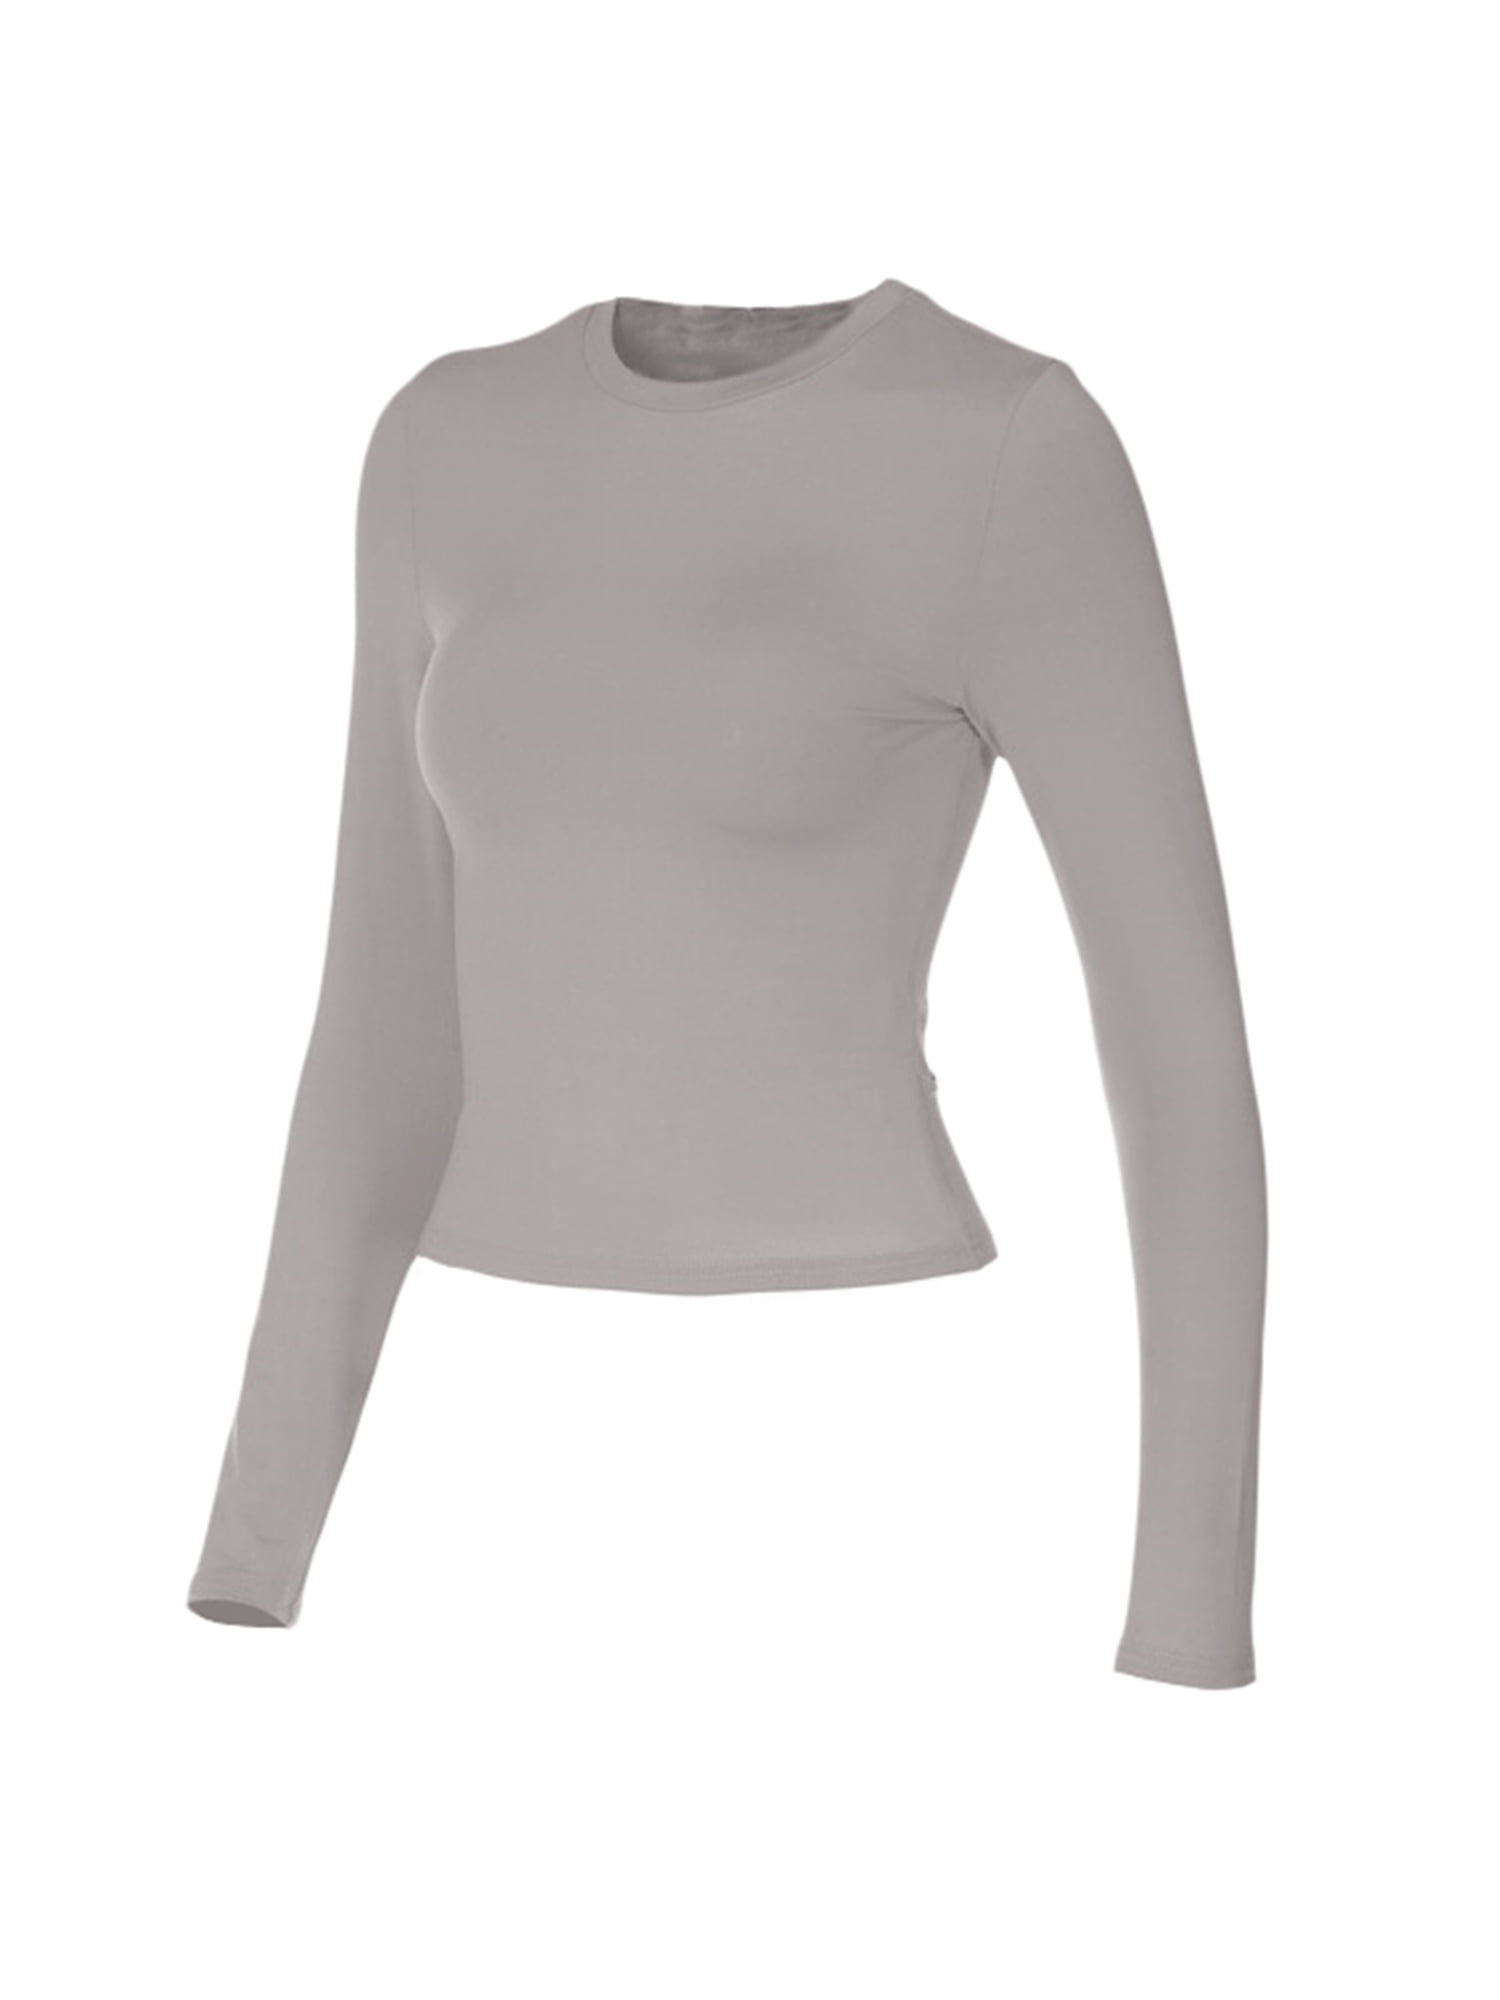 Licupiee Women Basic Long Sleeve Crop Top Low Cut Fitted Shirt Baby Tees Going  Out Tops Y2K Skinny Streetwear Crop Tops 